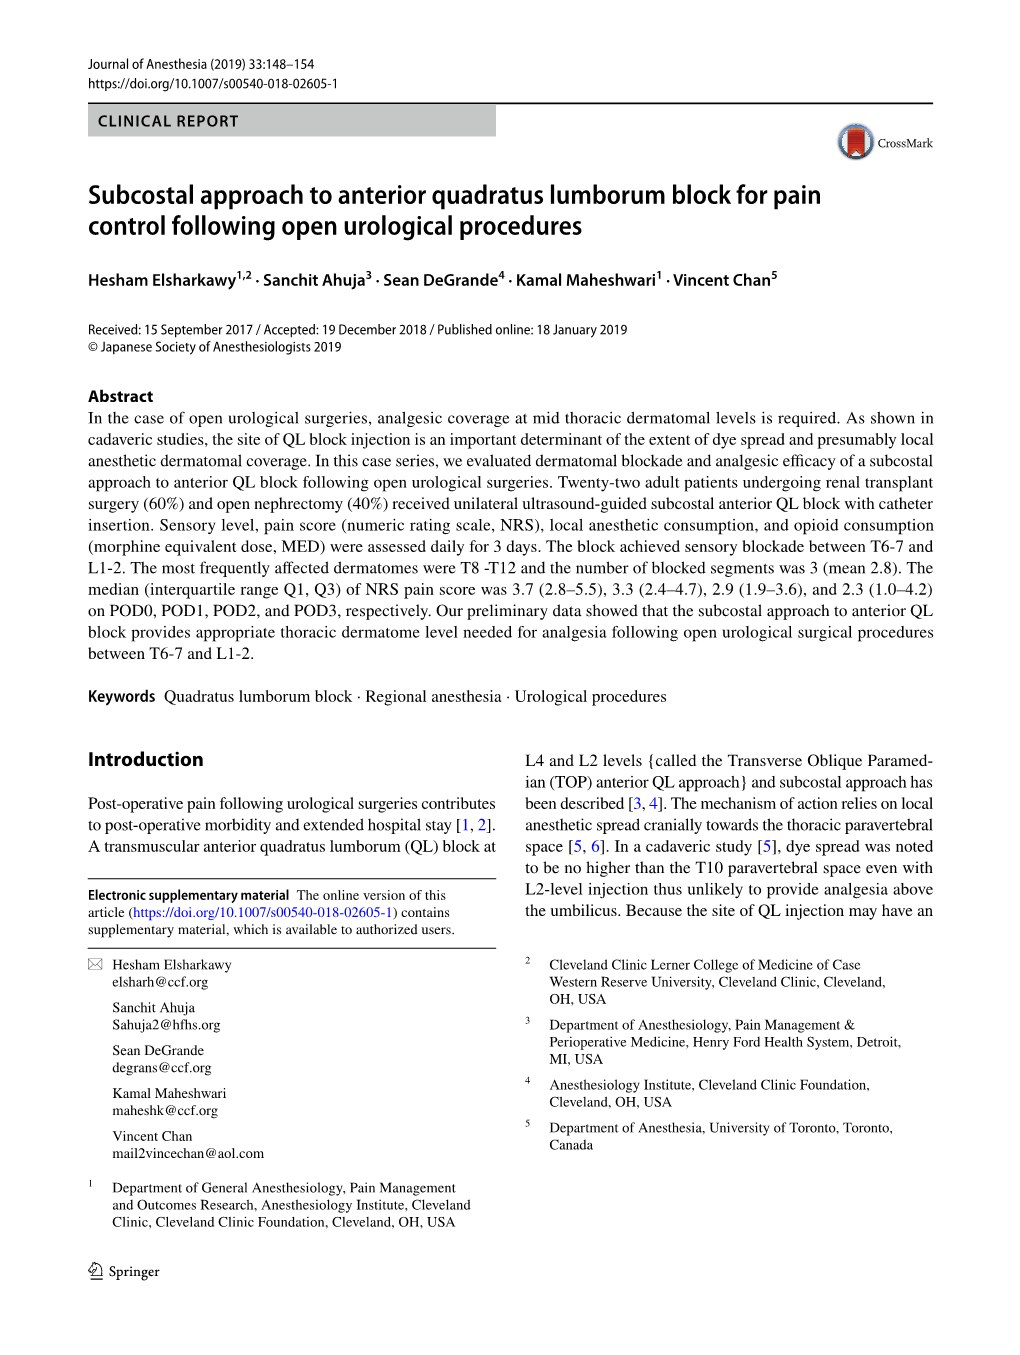 Subcostal Approach to Anterior Quadratus Lumborum Block for Pain Control Following Open Urological Procedures